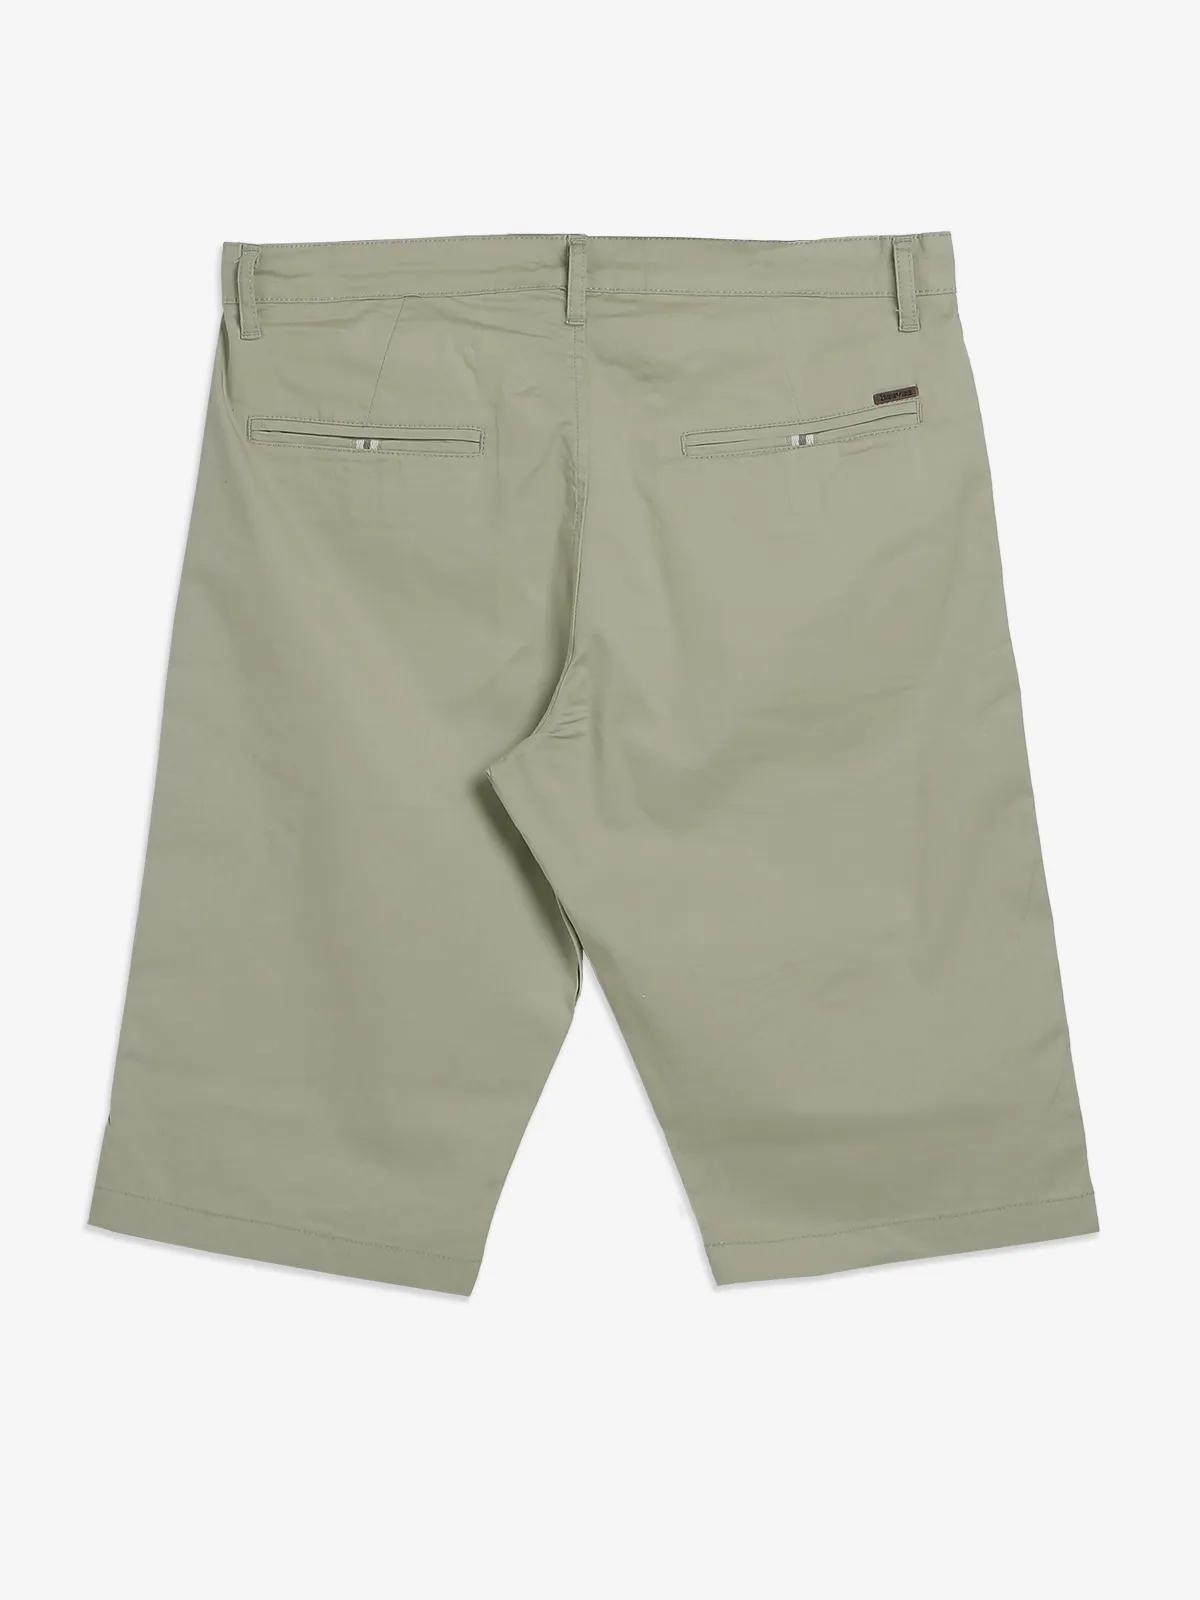 Beevee sage green solid shorts